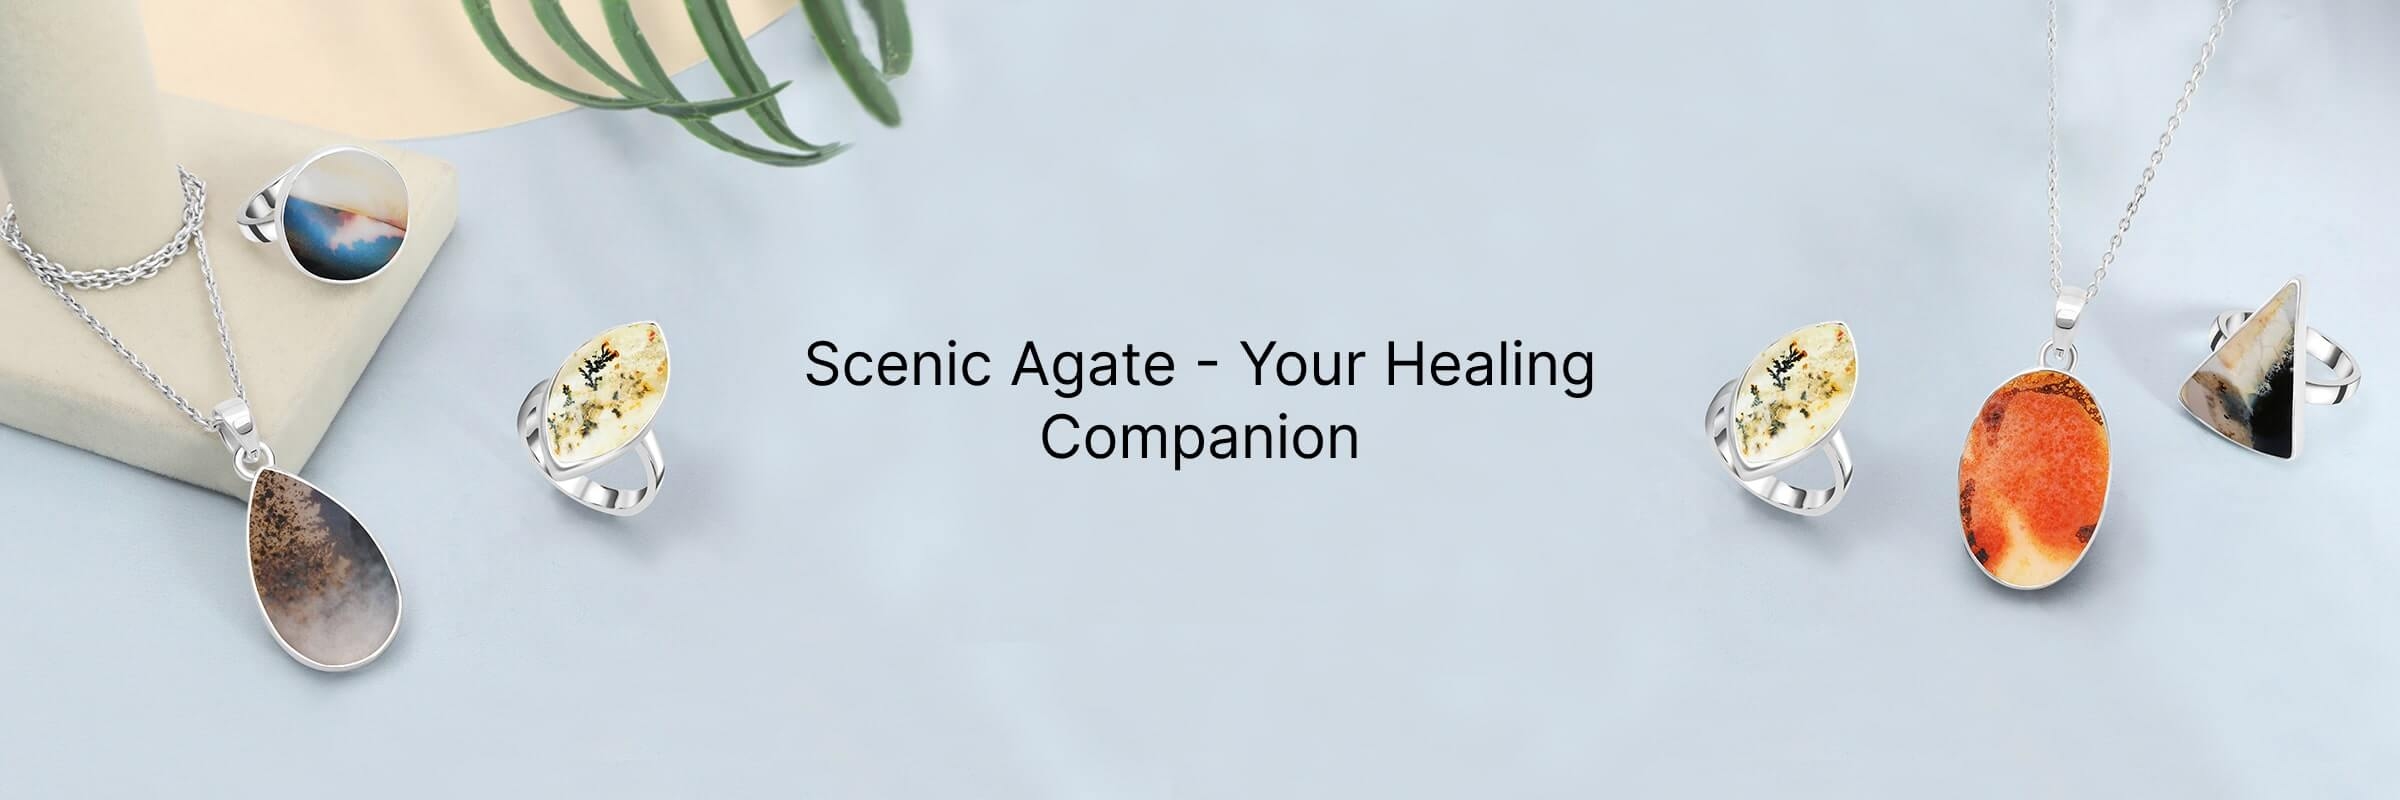 Healing Properties of Scenic Agate Gemstone